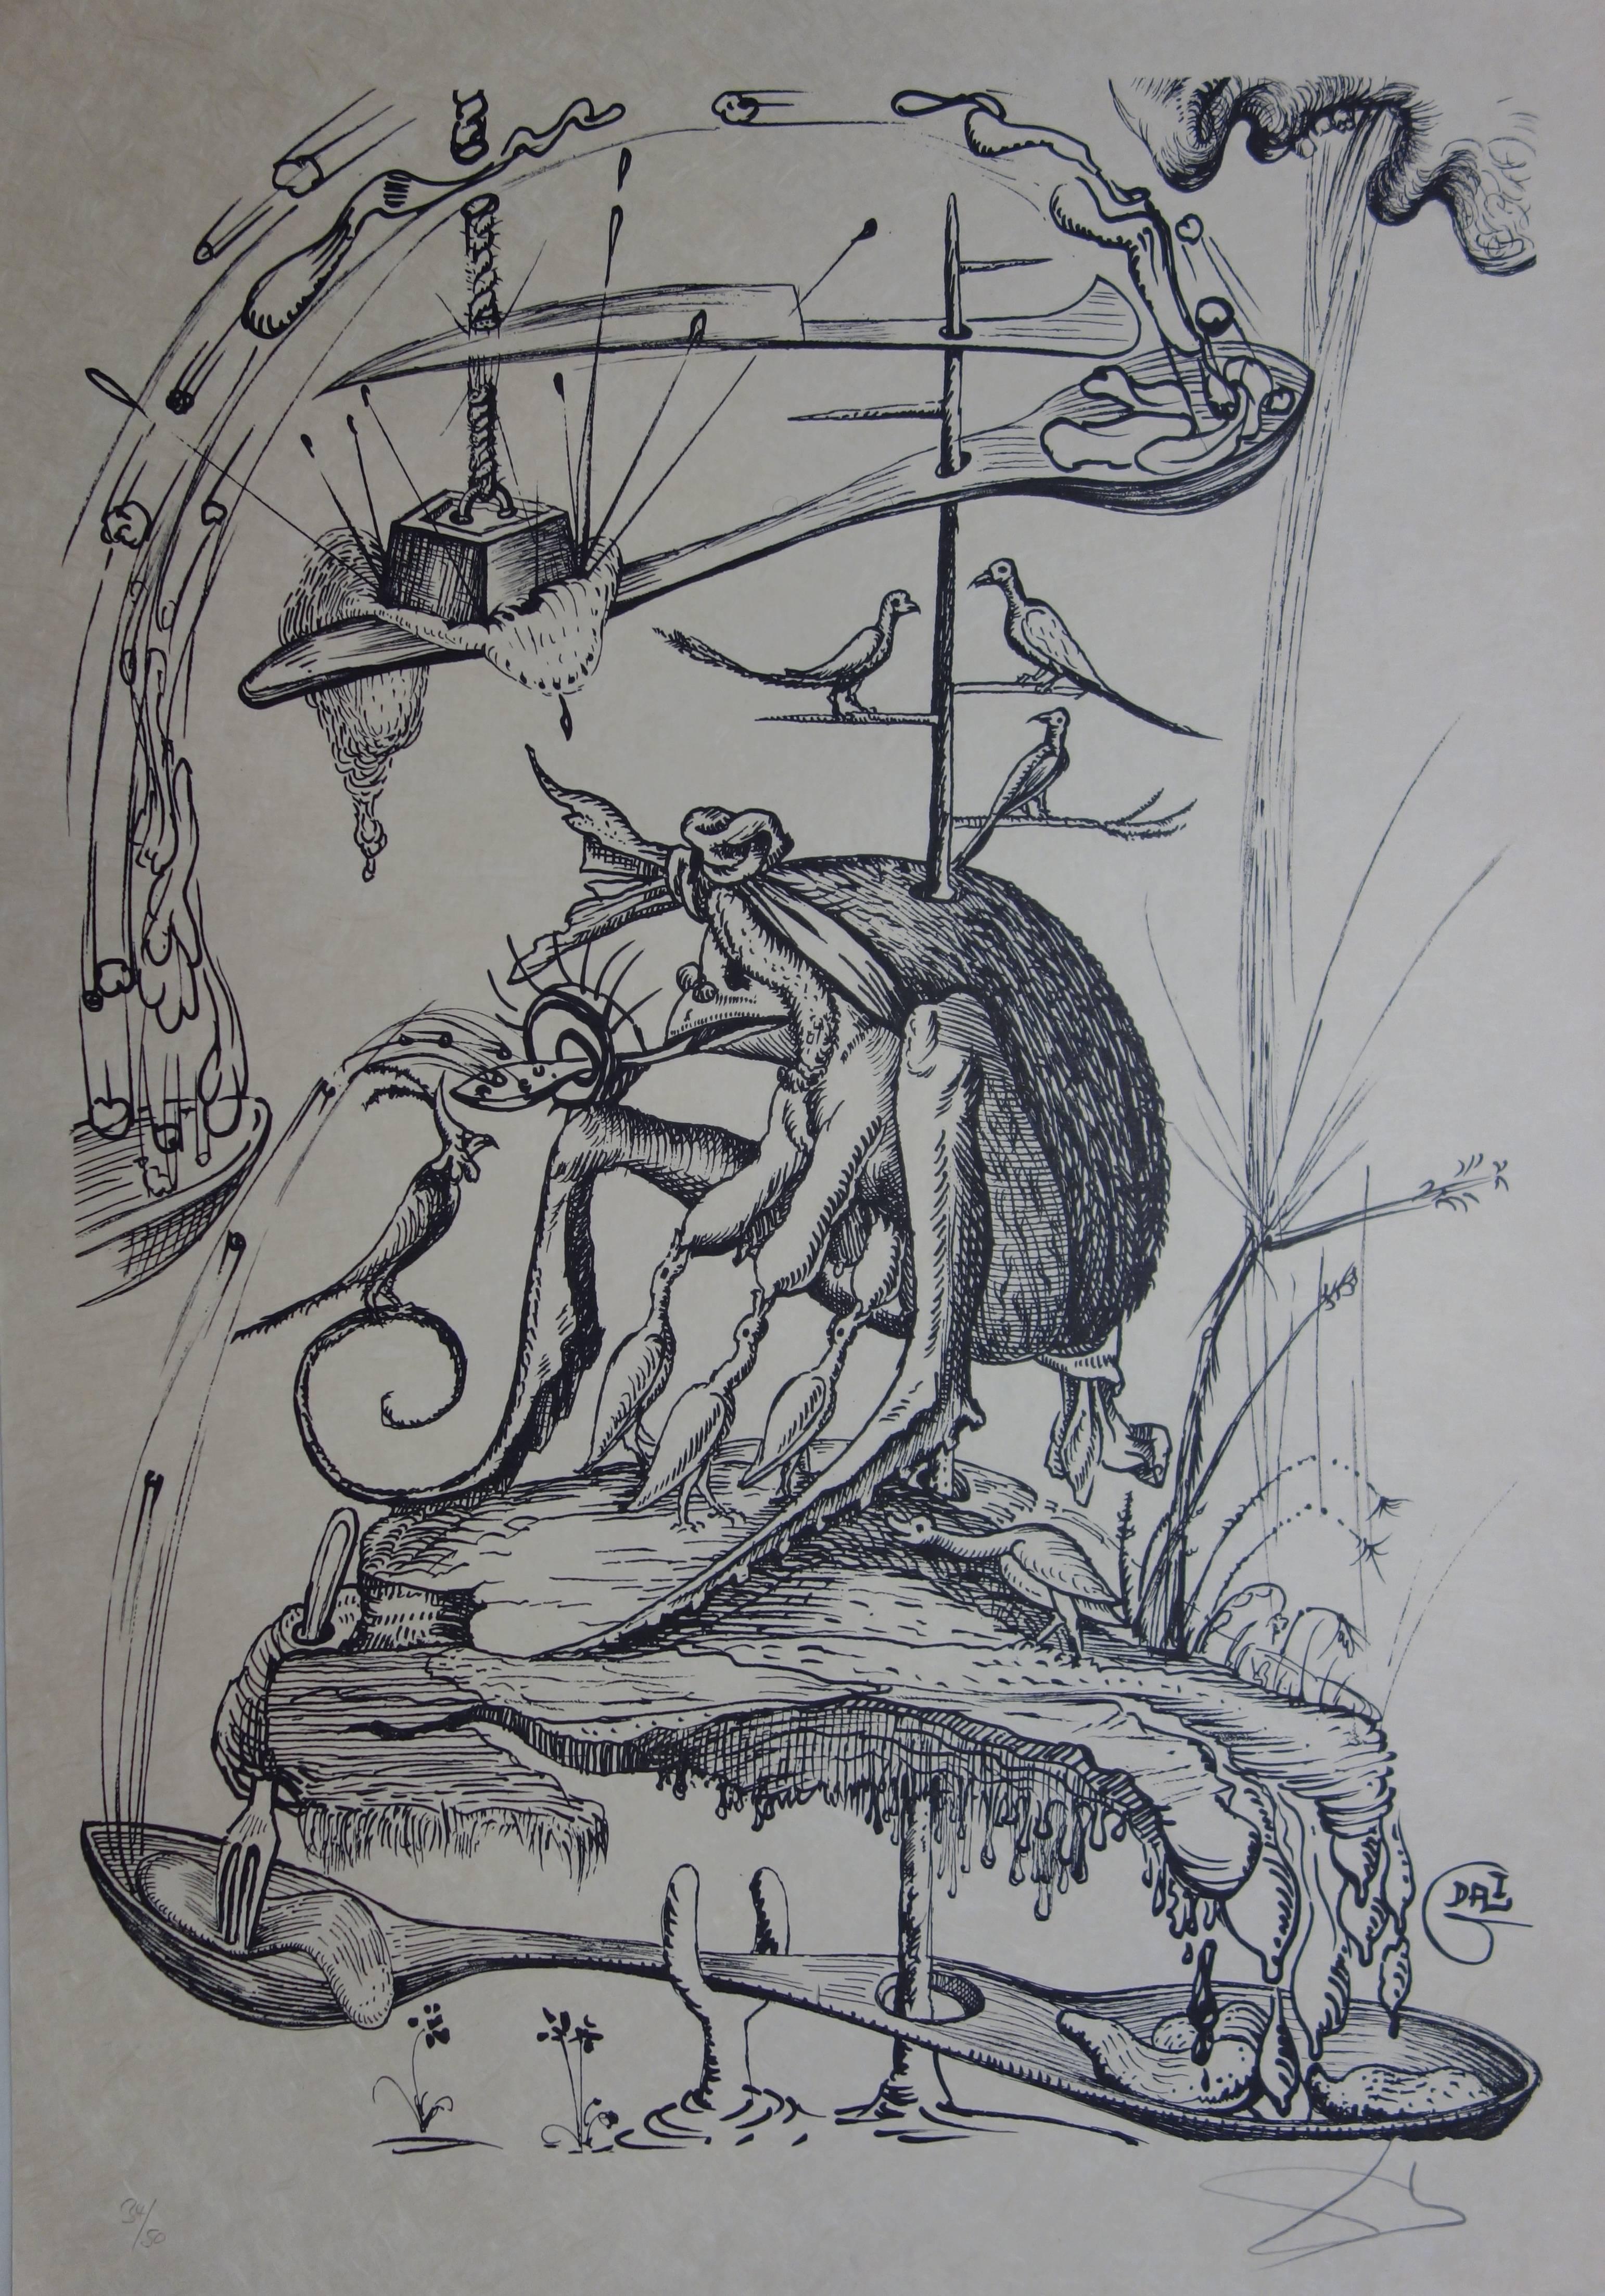 Salvador Dalí Figurative Print - Pantagruel : Plate 22 - The Bug Lady - Original handsigned lithograph